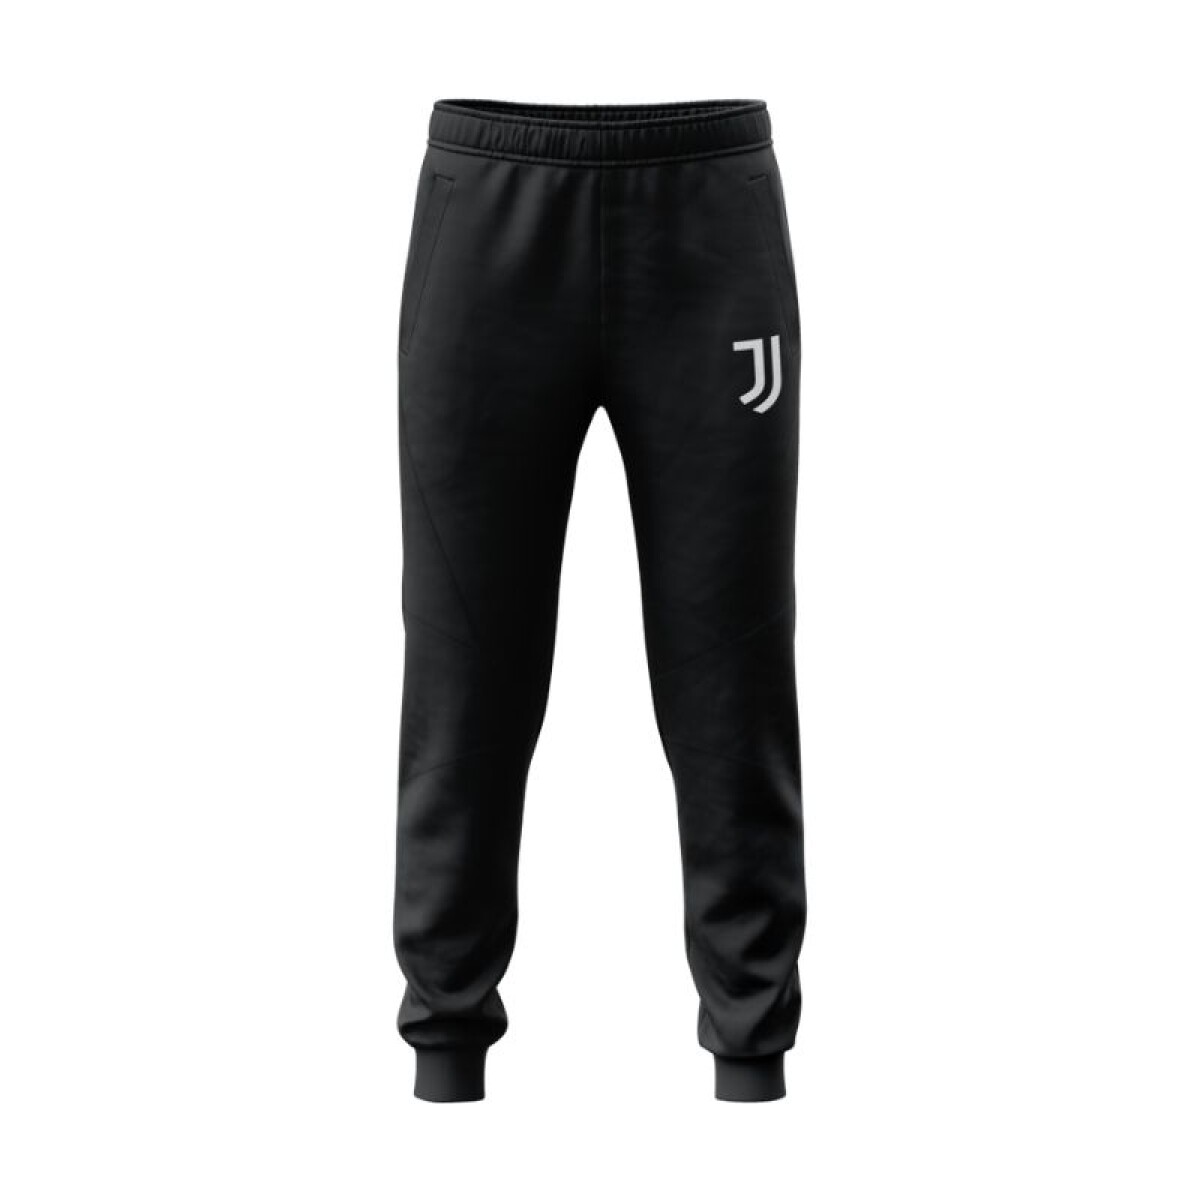 Pantalon Nba Entrenamiento Juventus JVPT52164-BLK - Color Único 